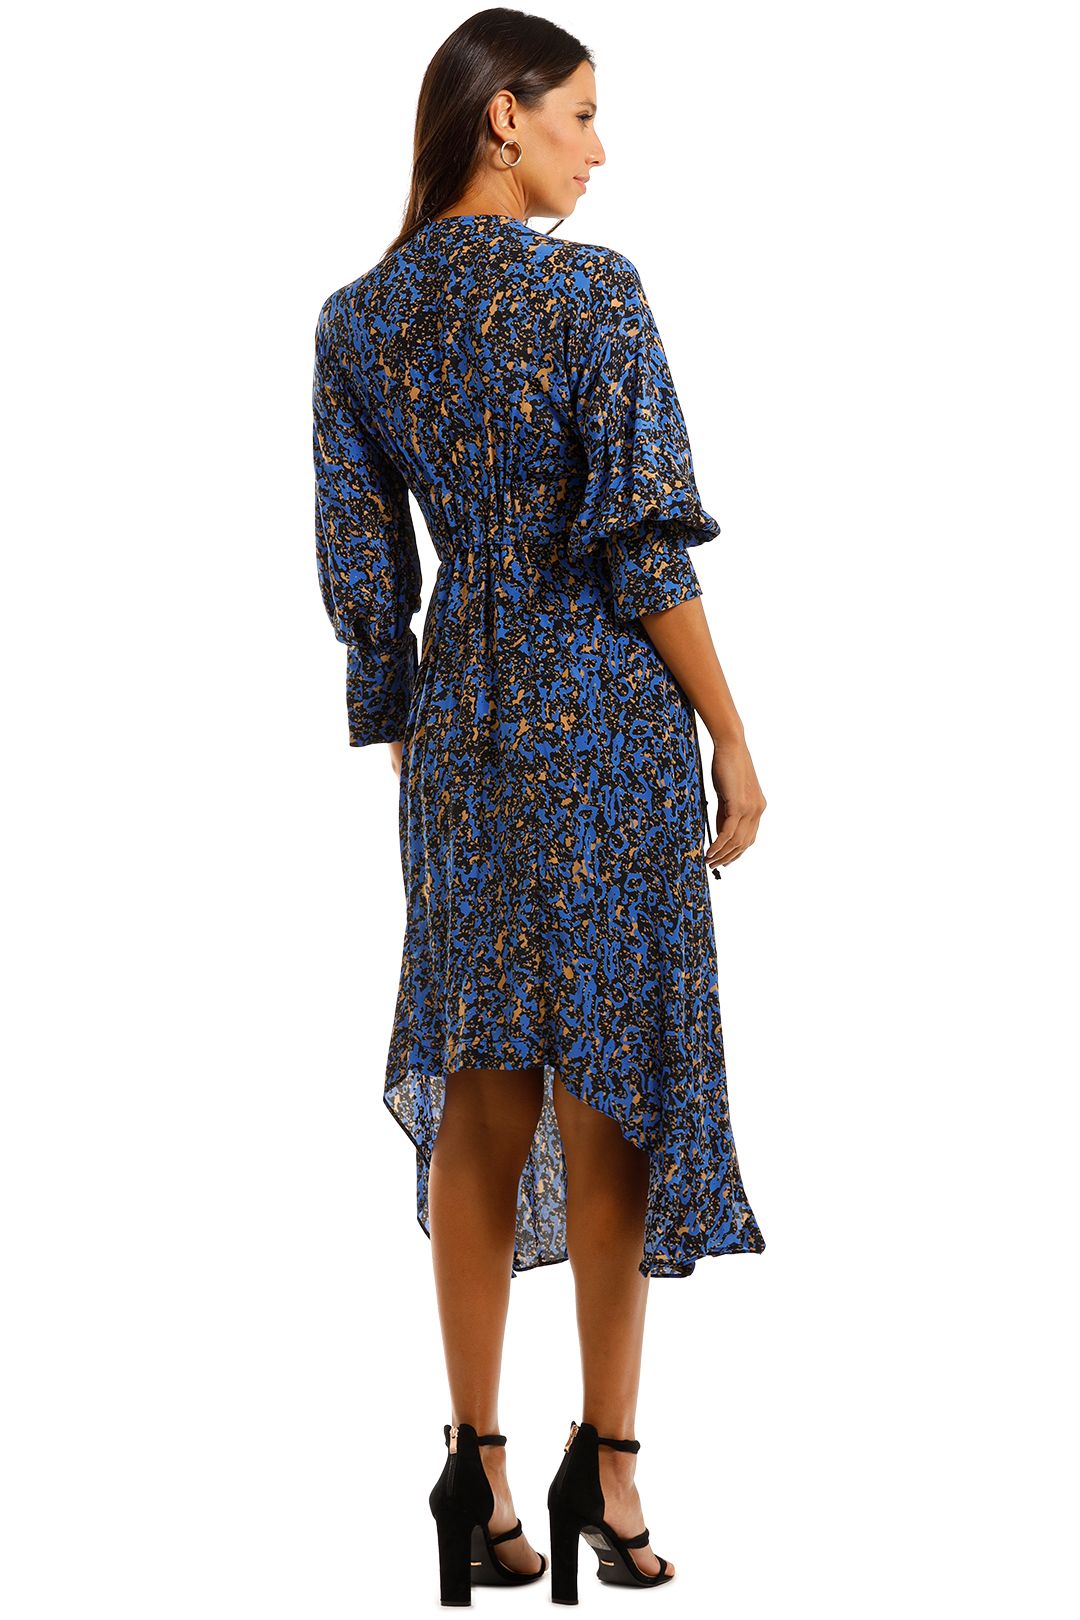 KITX Algae Future Dress Blue Midi Dress Asymmetric Skirt